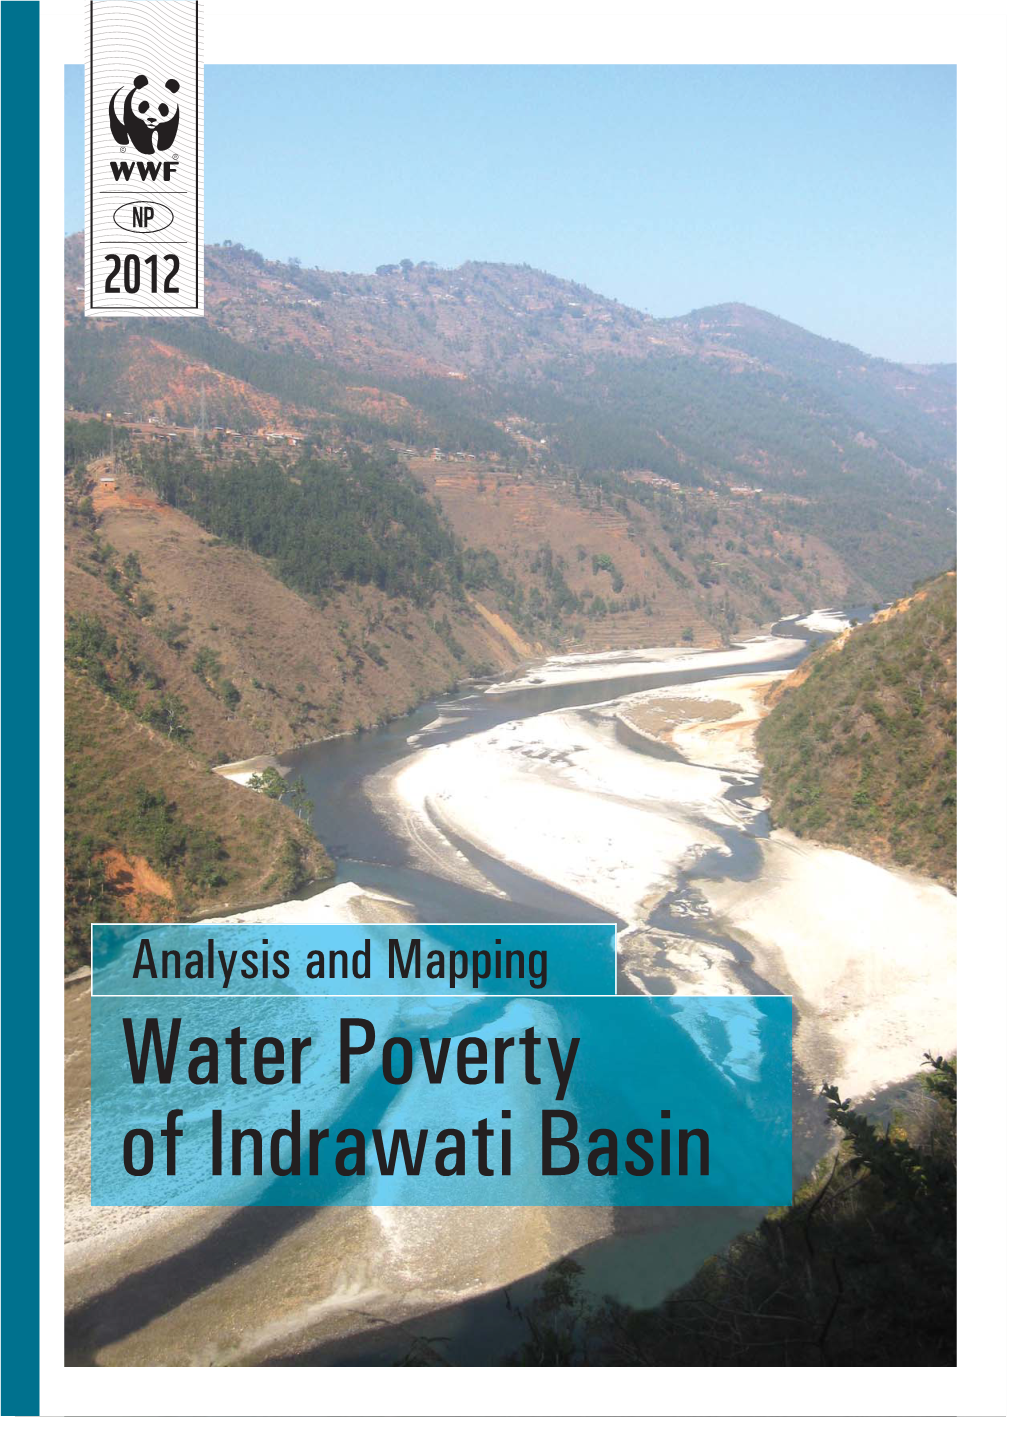 Water Poverty of Indrawati Basin